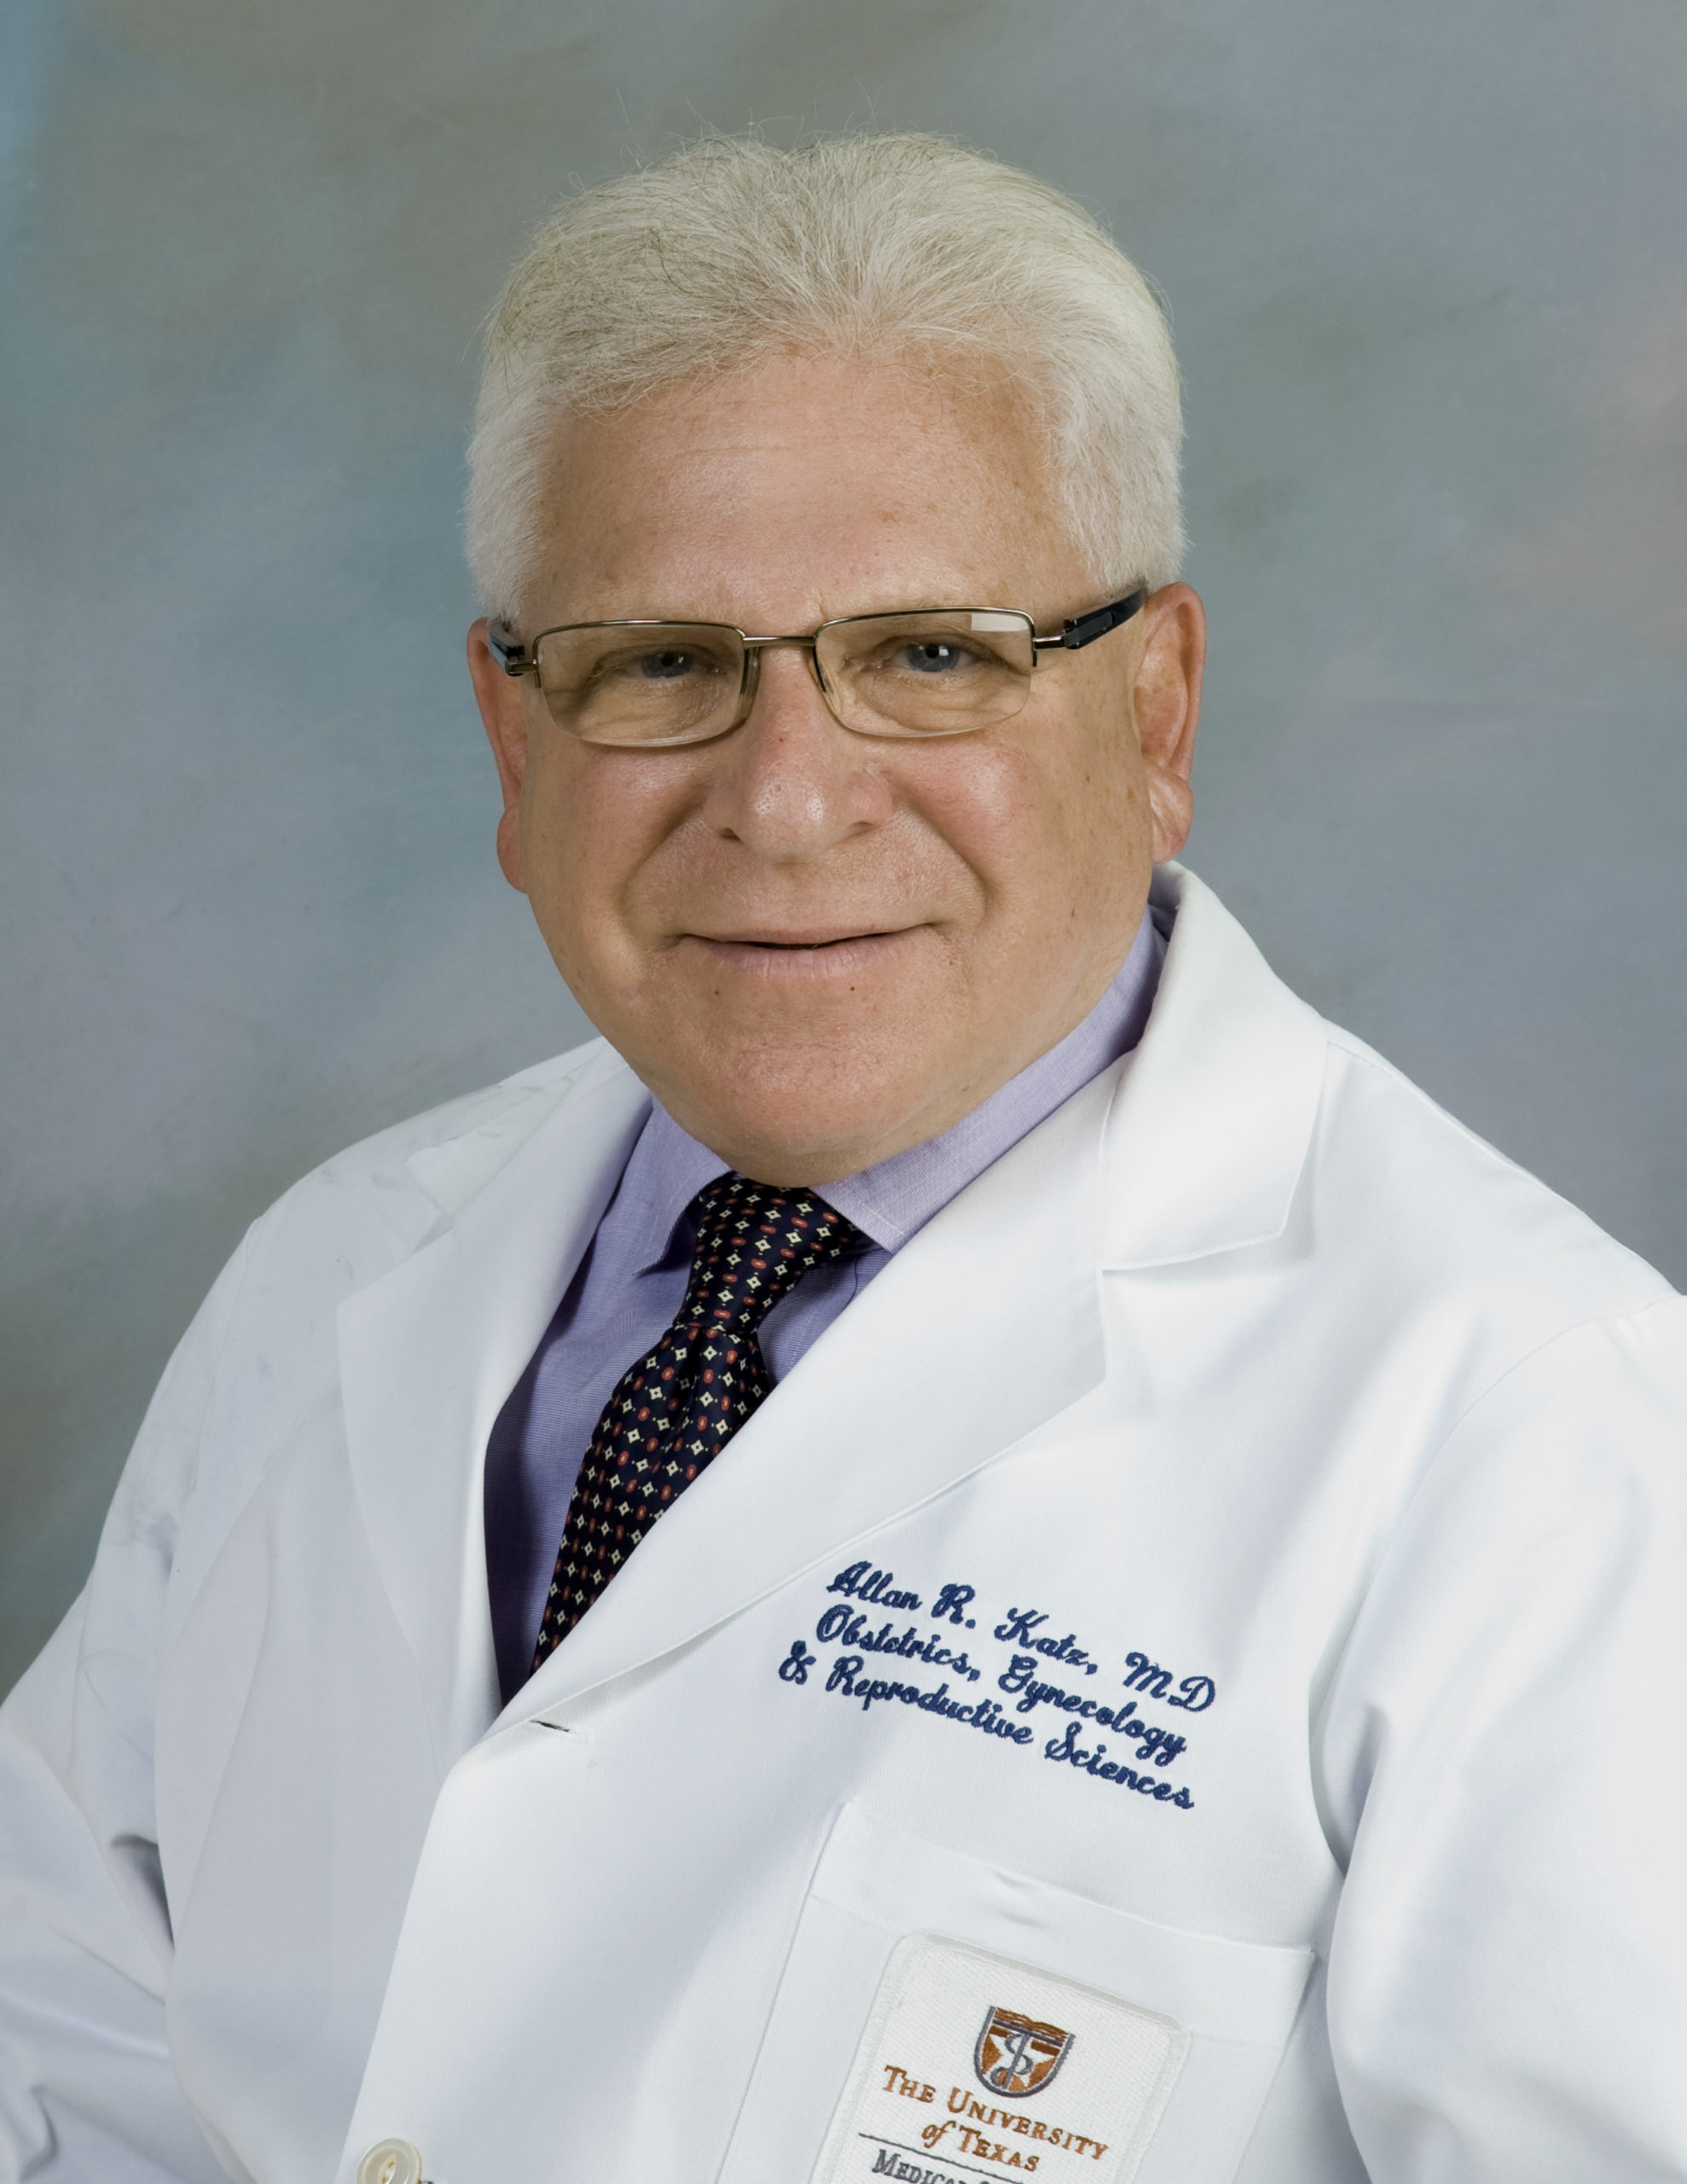 Allan R. Katz Doctor in Houston, Texas